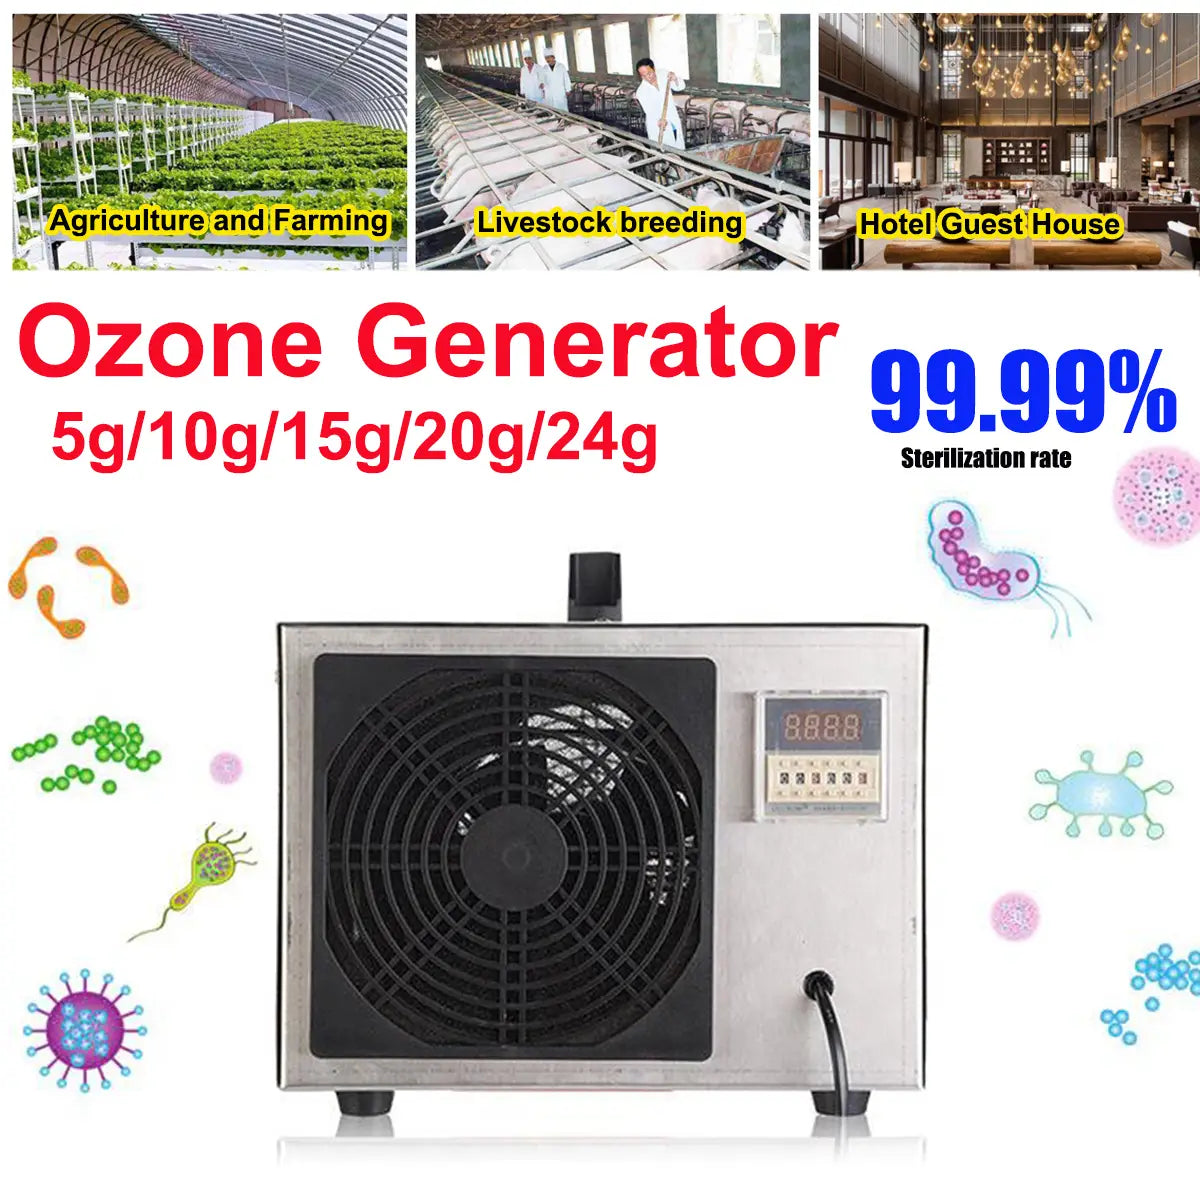 5g/10g/15g/20g/24g Ozone Generator Sterilization Machine